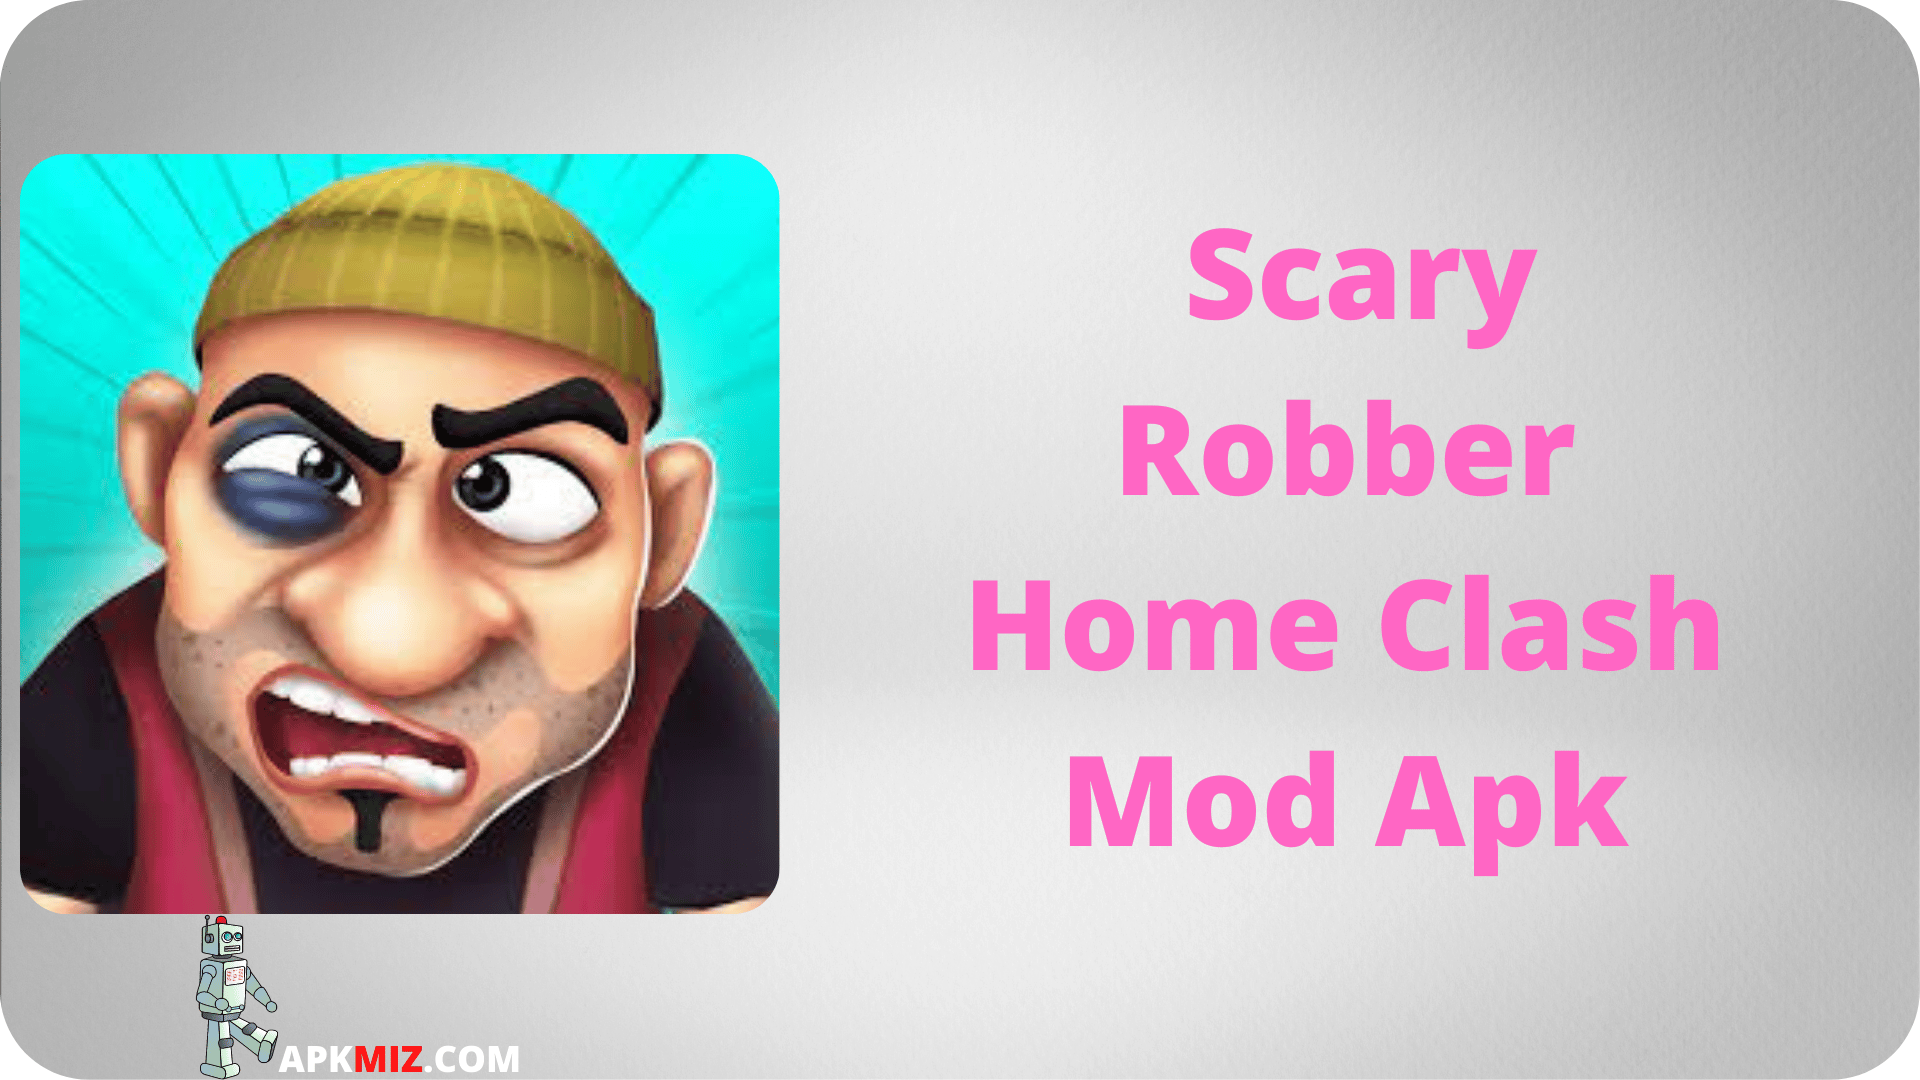  Scary Robber Home Clash Mod Apk